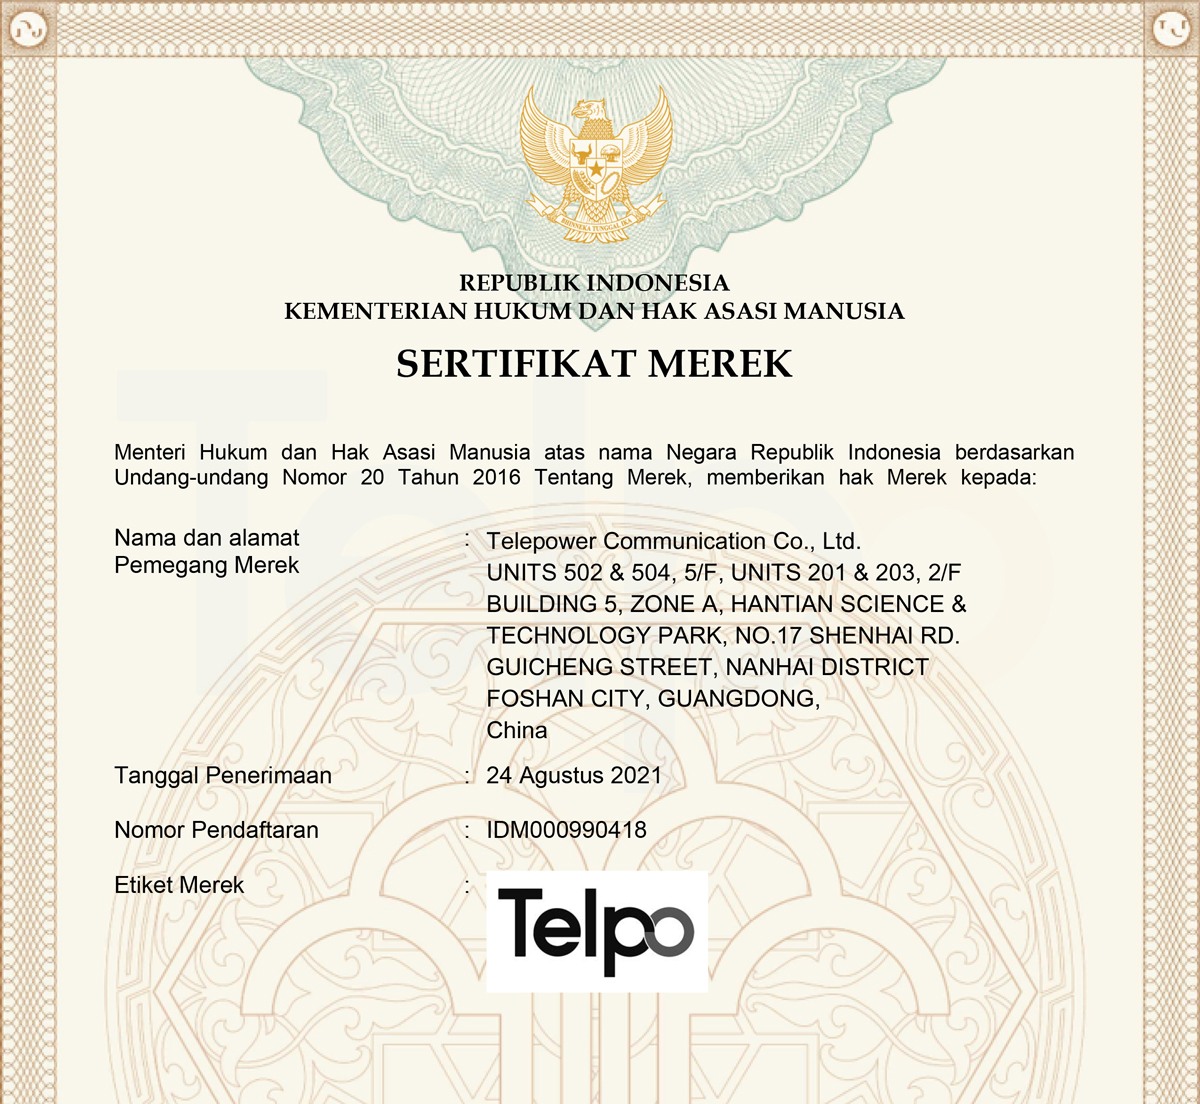 Telpo Indonesian trademark